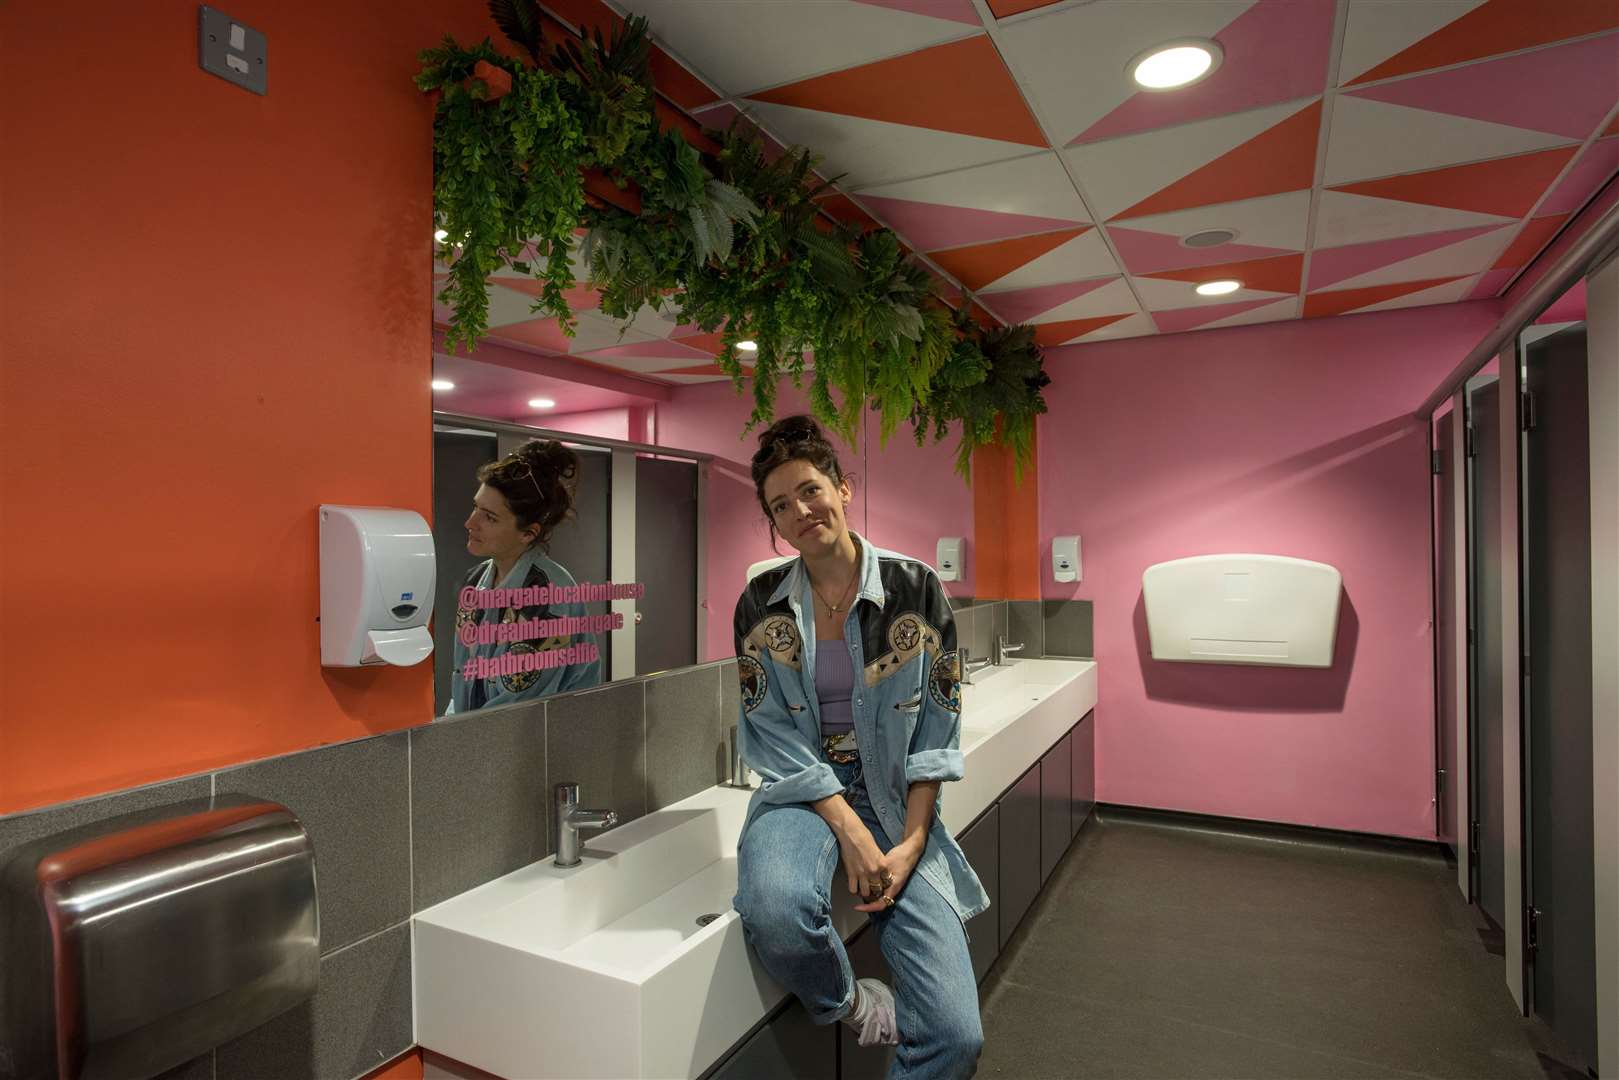 Dreamland bathrooms have had a designer revamp by designer Amy Exton